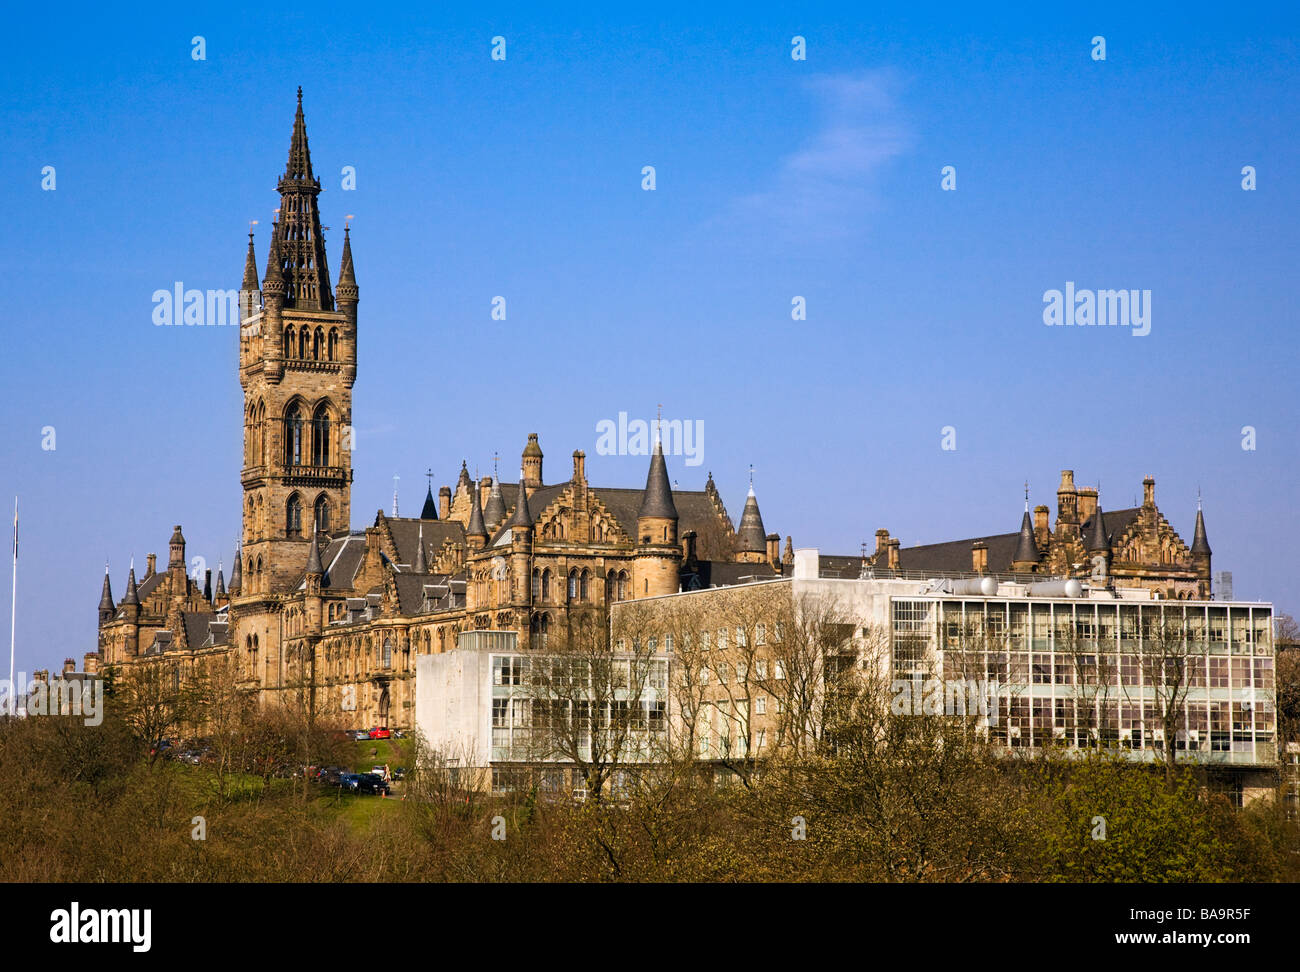 Glasgow University on Gilmorehill, City of Glasgow, Scotland. Stock Photo